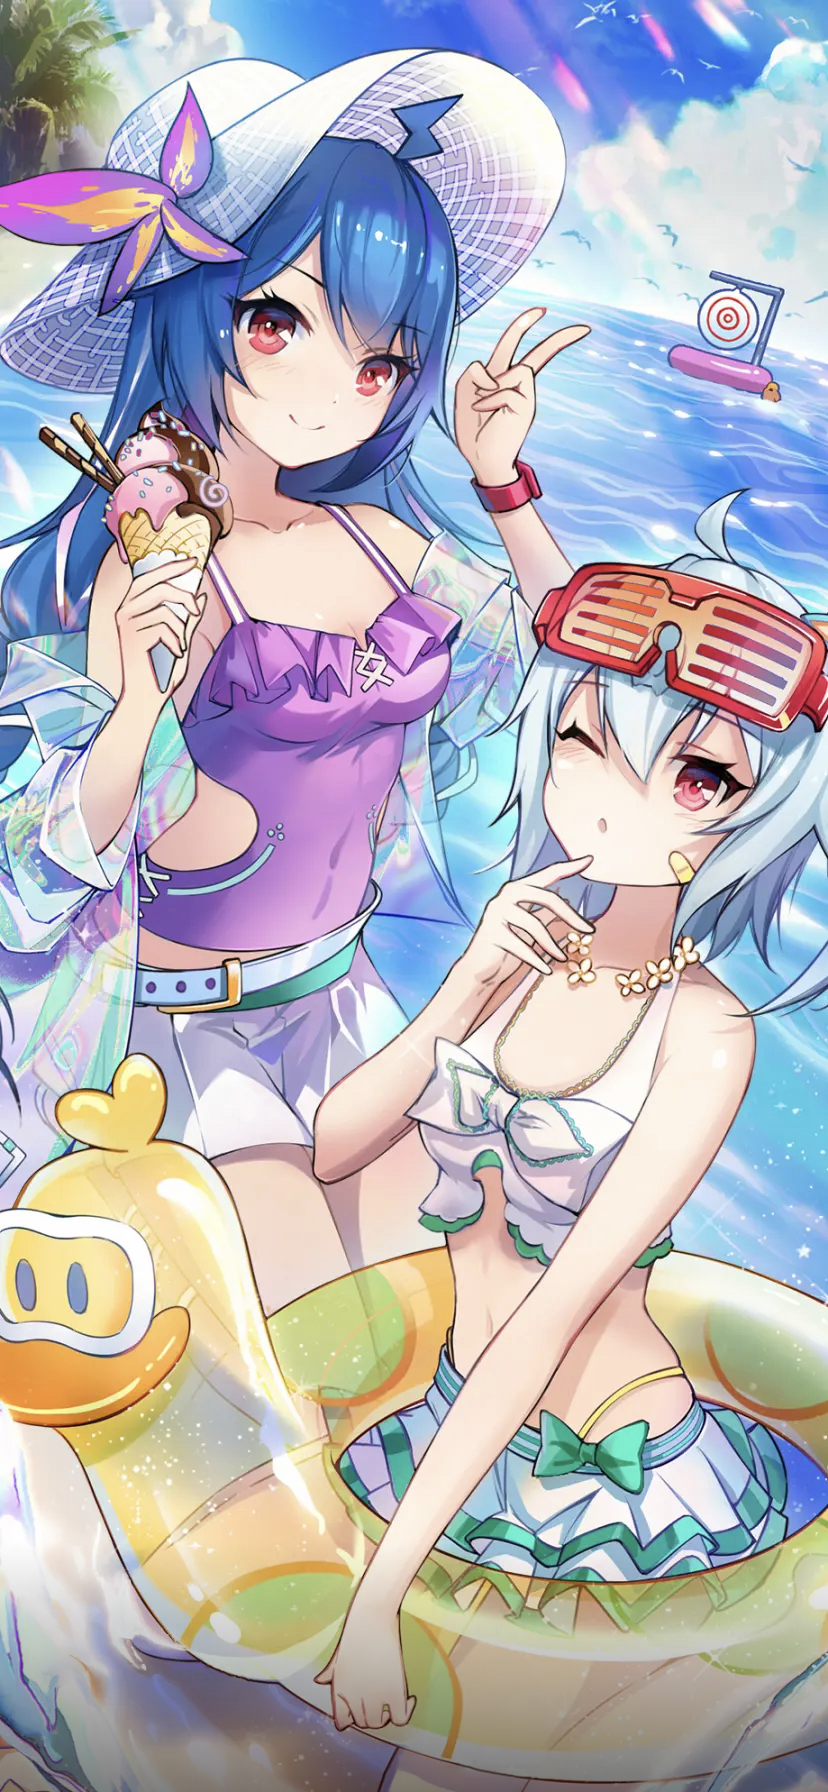 Anime 828x1792 bilibili Bilibili Douga digital art anime girls goggles hat floater water swimwear ice cream peace sign